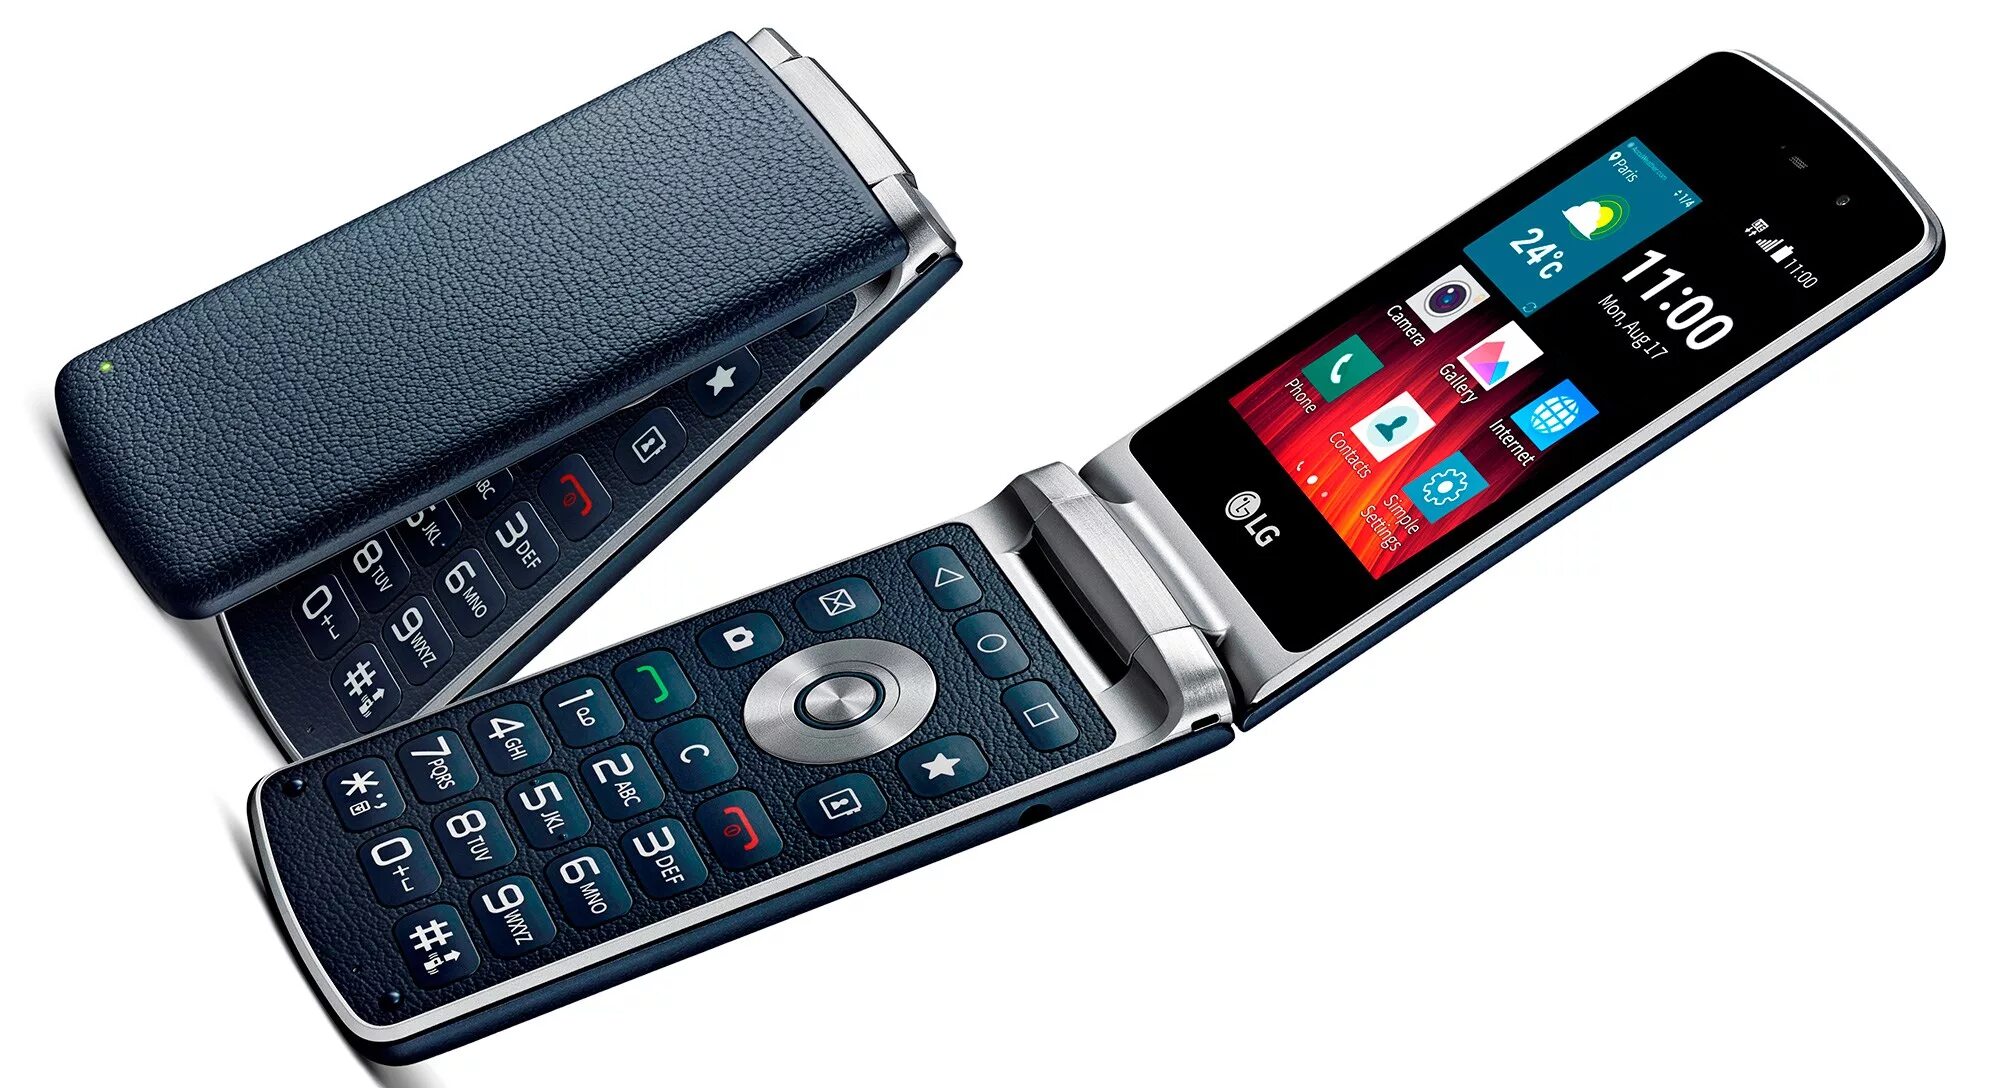 Samsung lg телефон. Раскладушка LG Wine h410. Смартфоны раскладушки LG h410. Раскладушка Lenovo a588t. Самсунг раскладушка 2020 кнопочный.